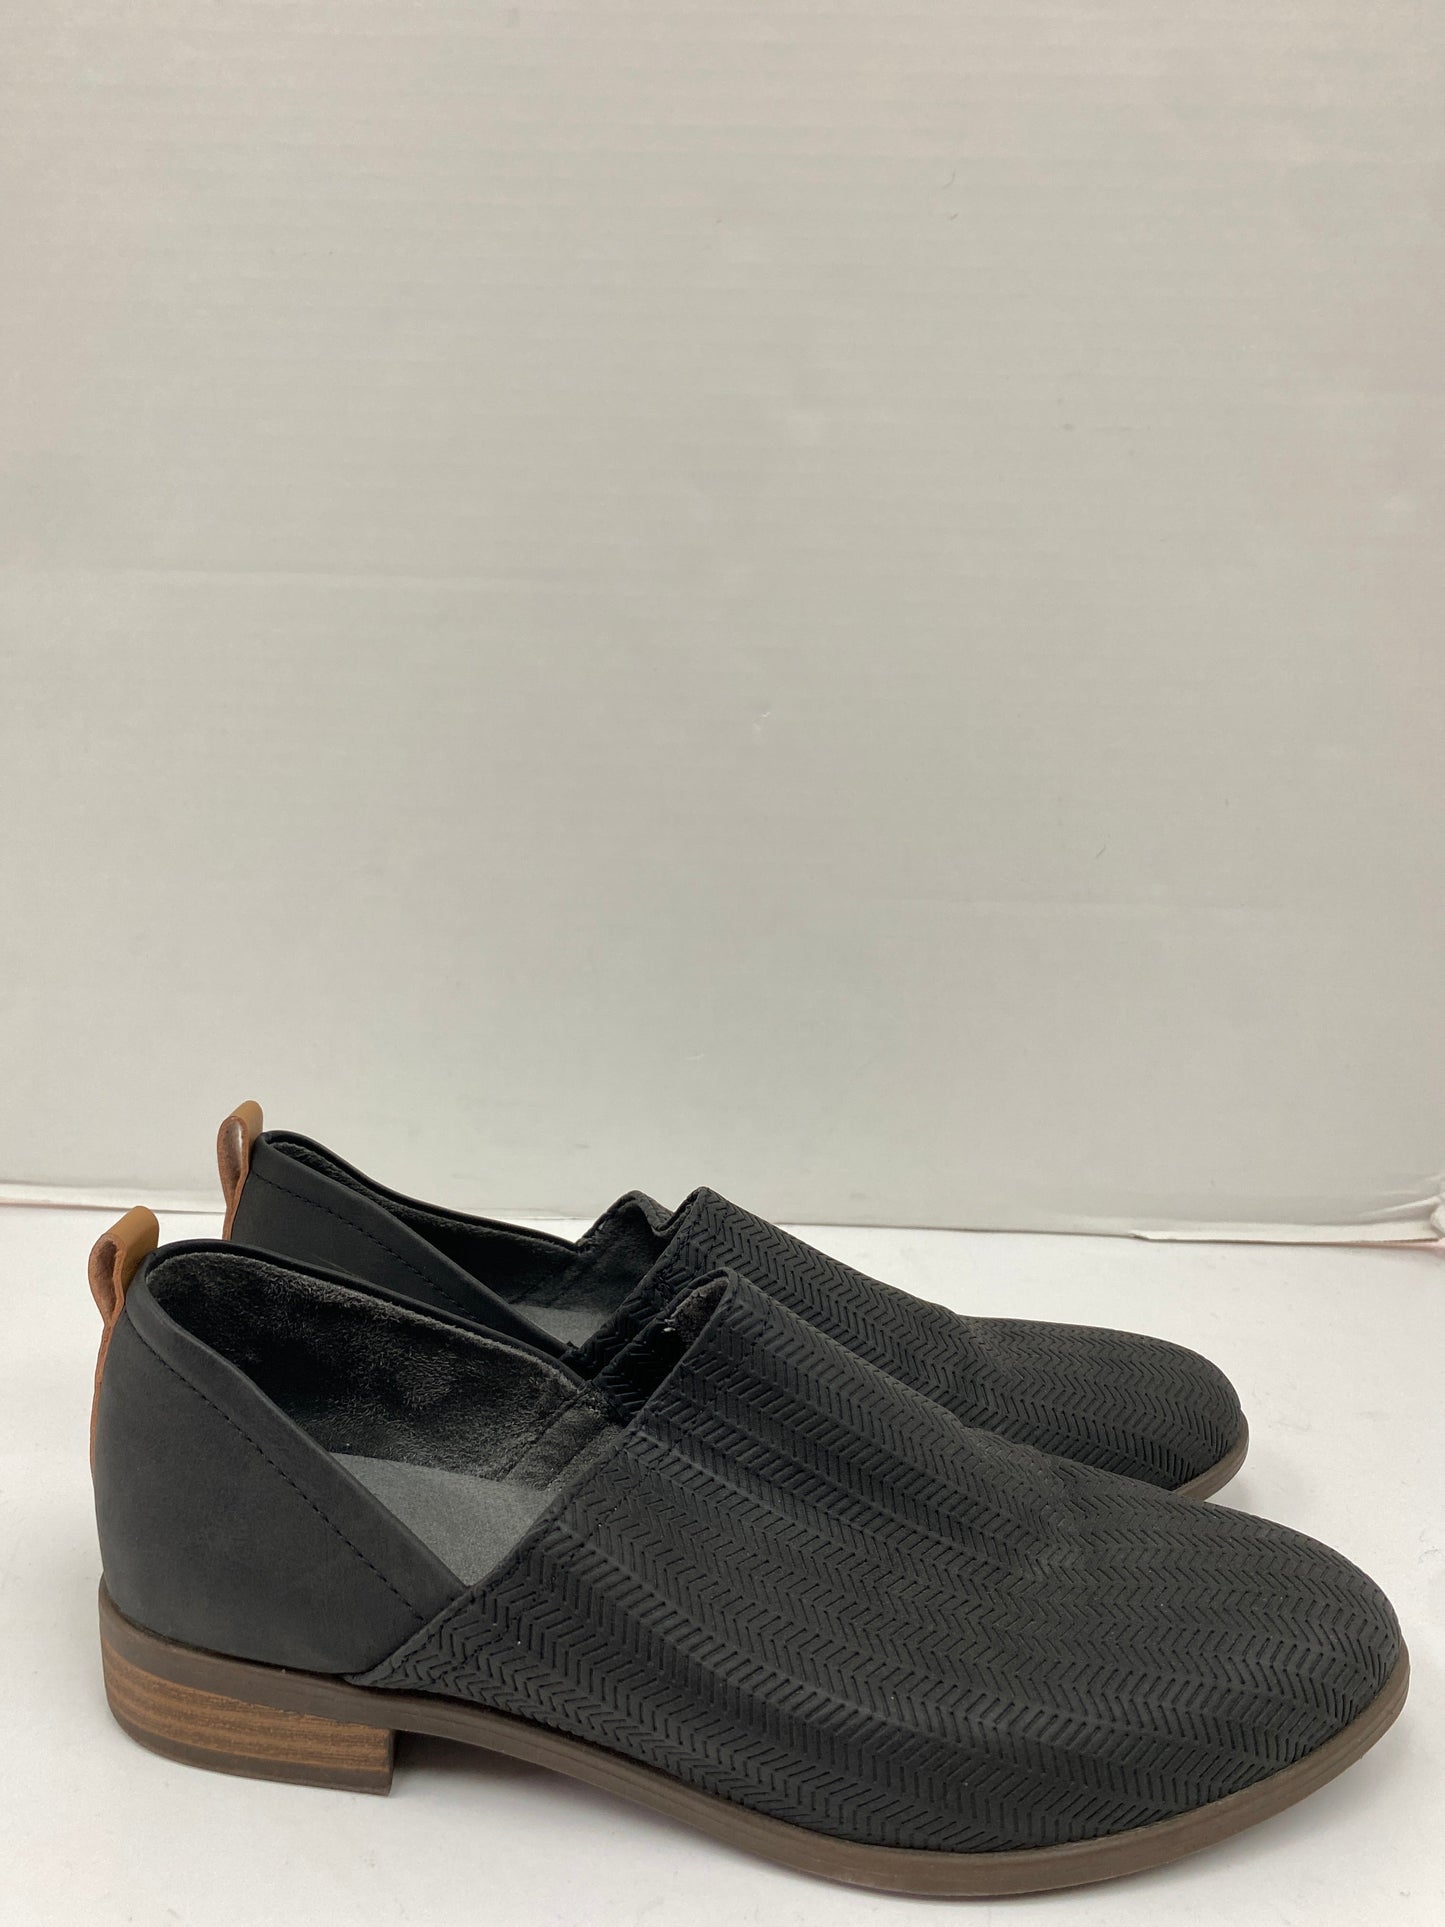 Shoes Flats By Dr Scholls  Size: 7